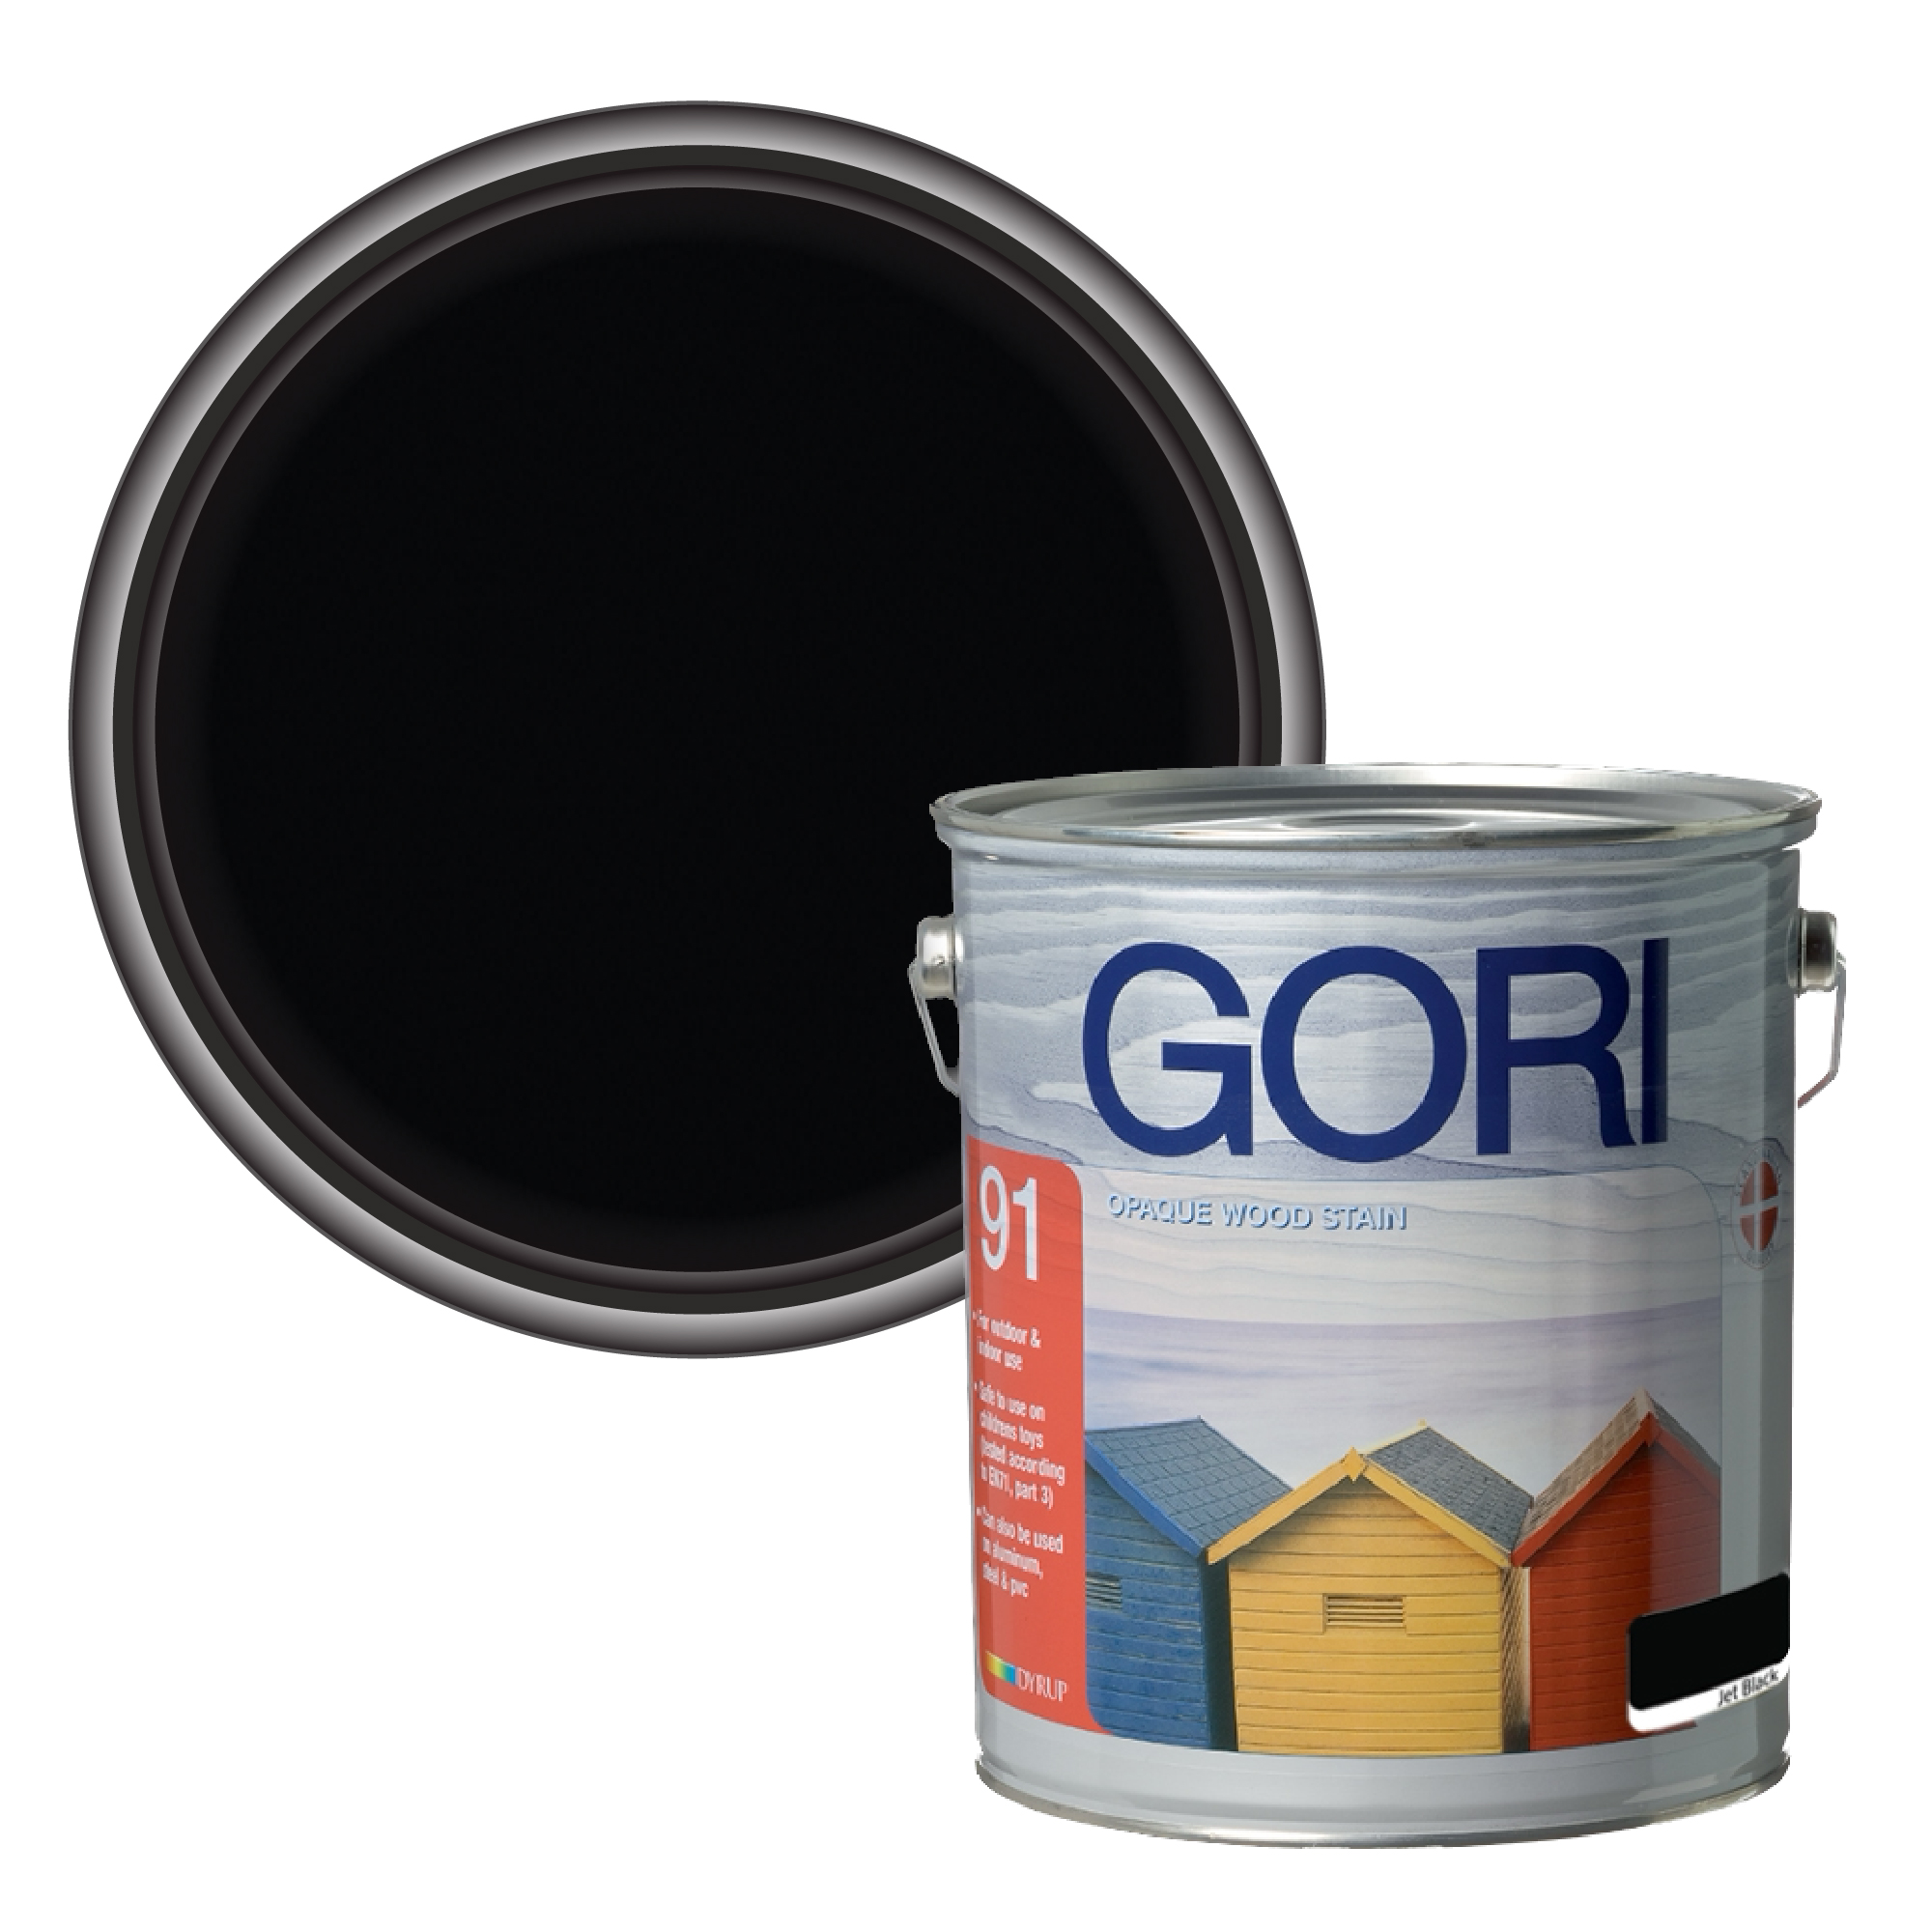 Sơn gỗ Gori 91-8800 Black